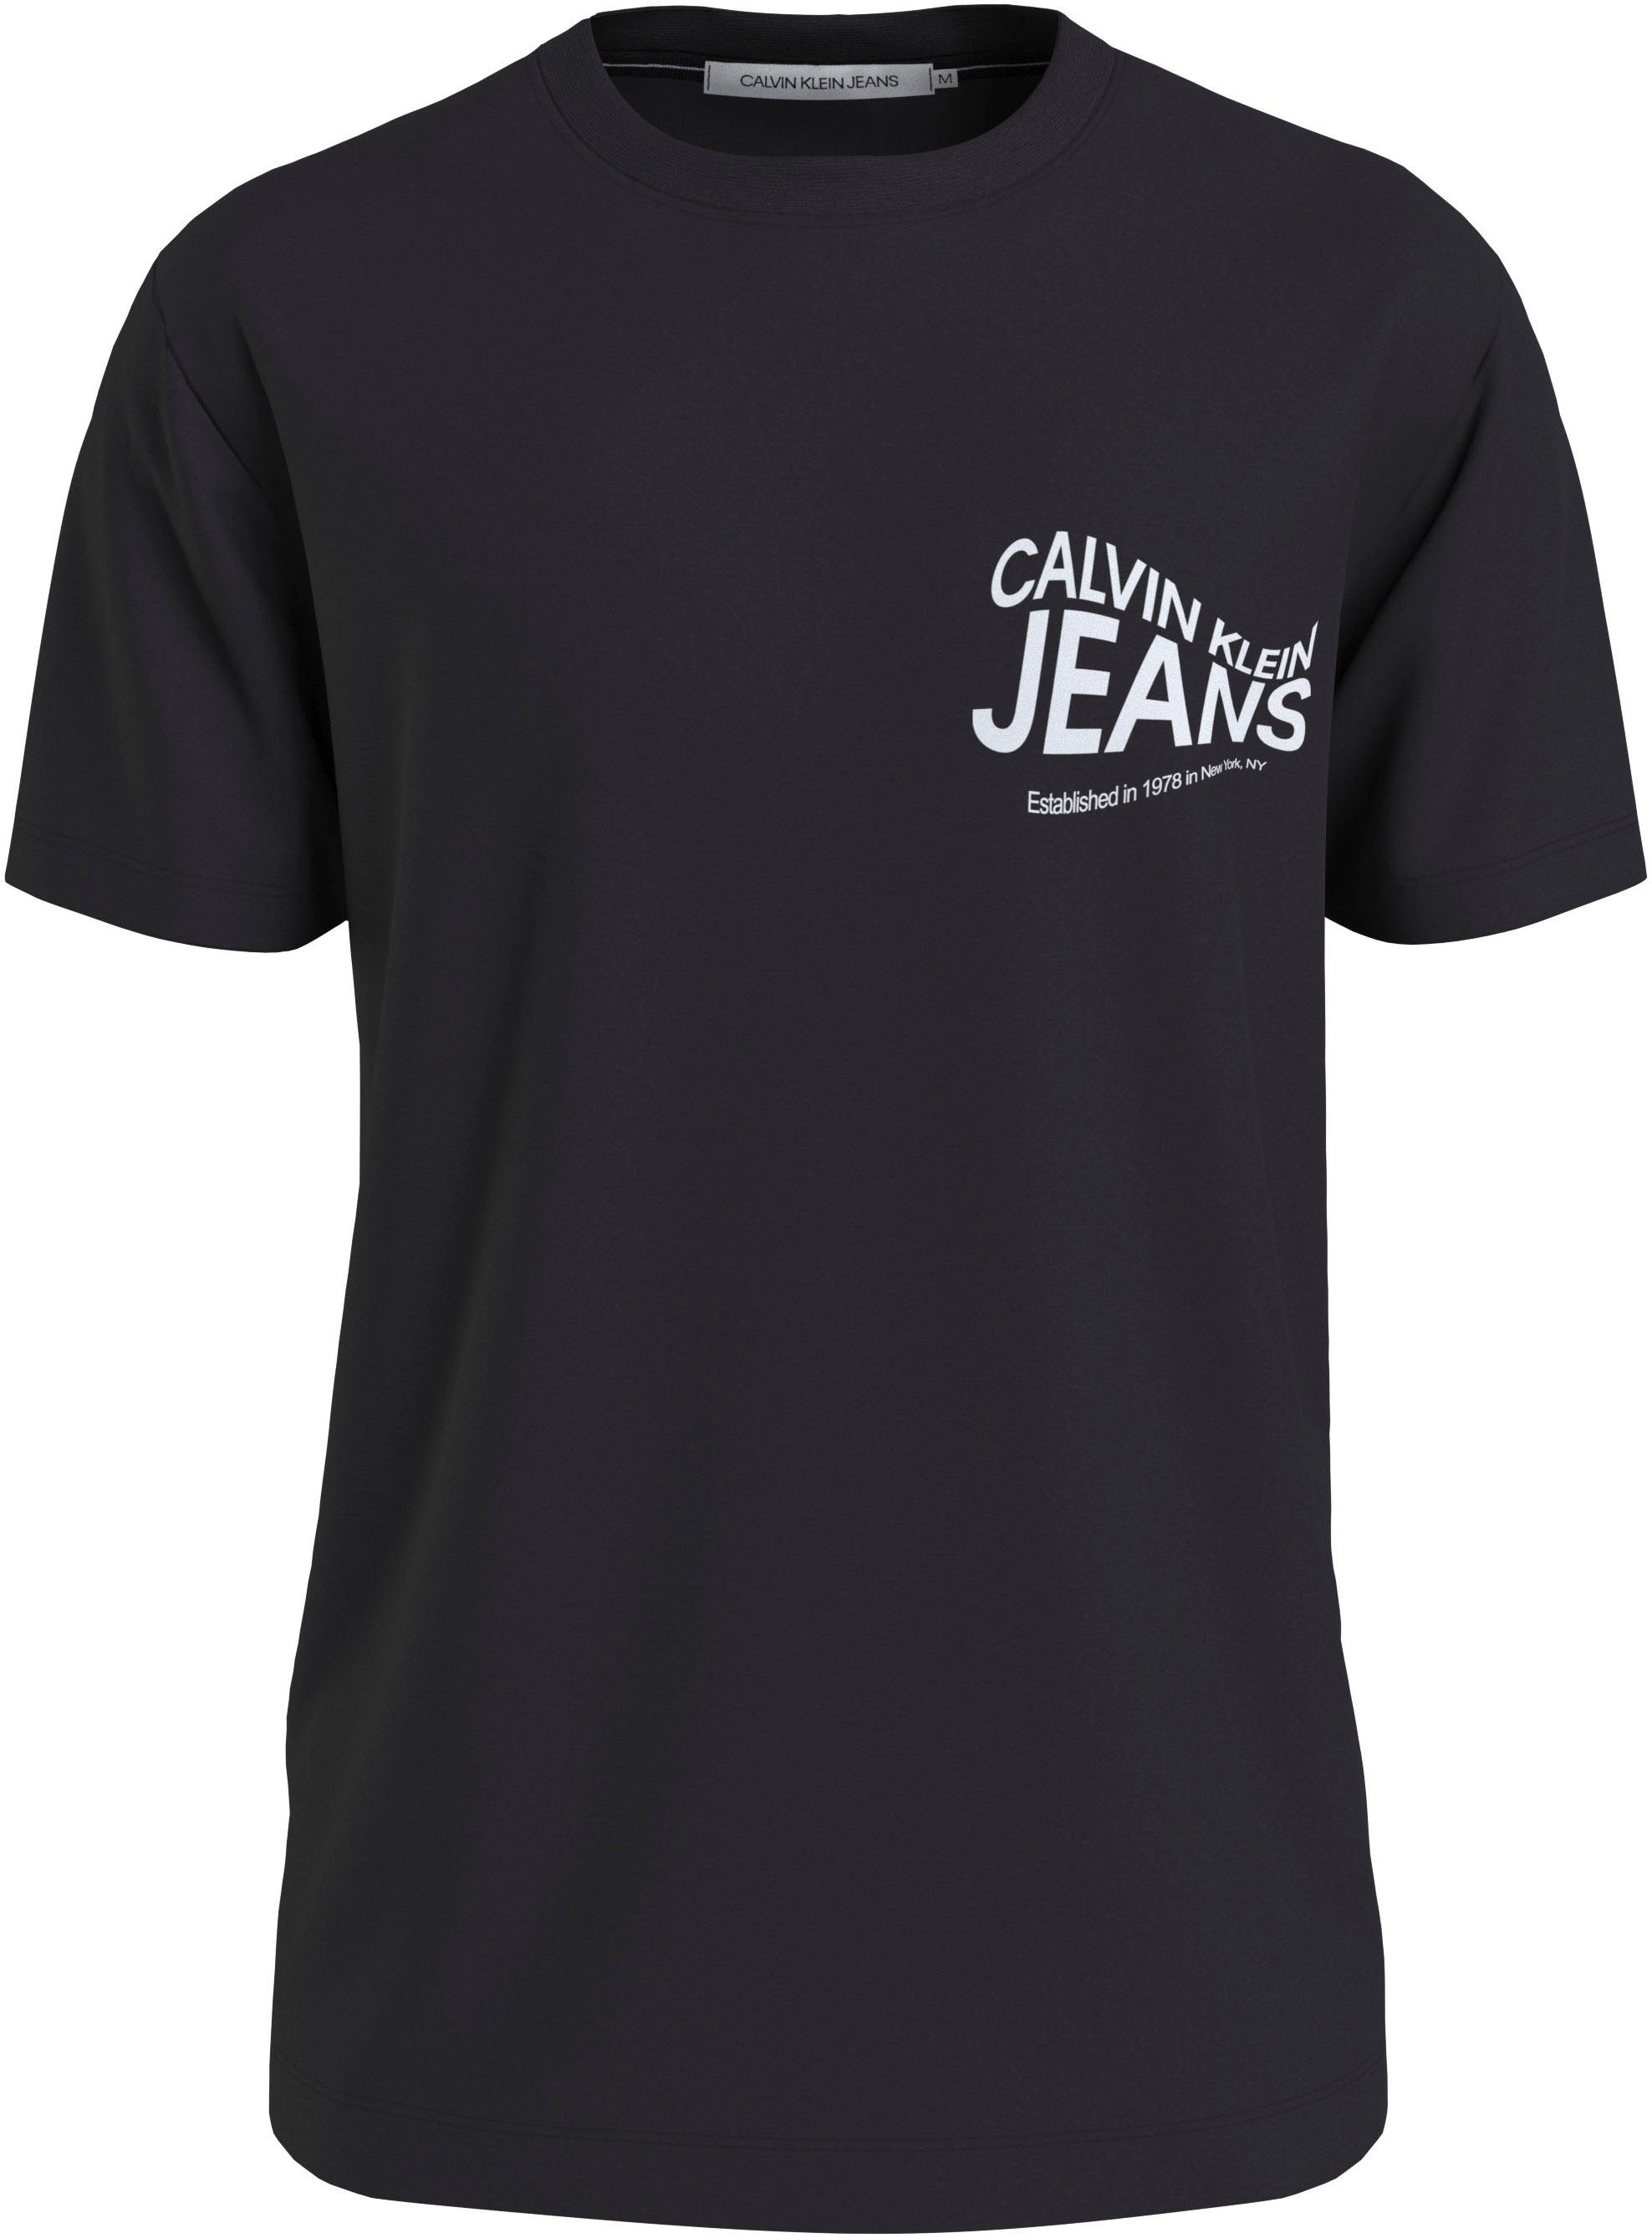 Klein Black FUTURE TEE Jeans MOTION GRAPHIC Ck Calvin T-Shirt